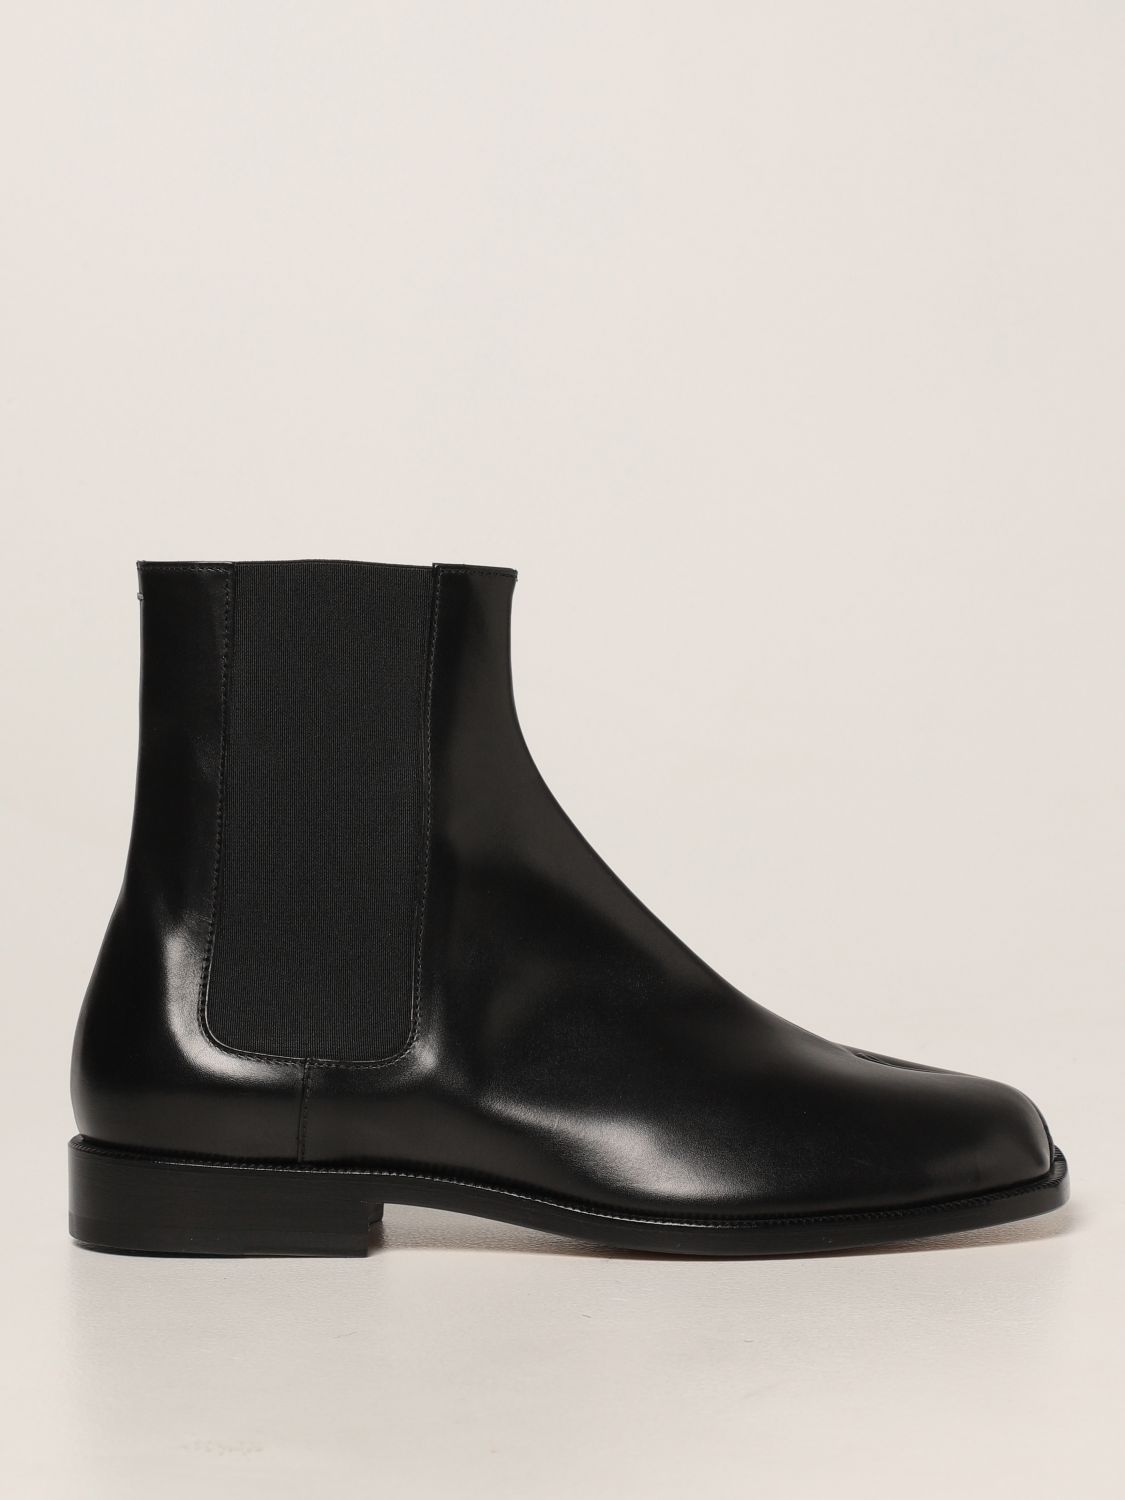 MAISON MARGIELA: Tabi split leather ankle boots - Black | Maison ...